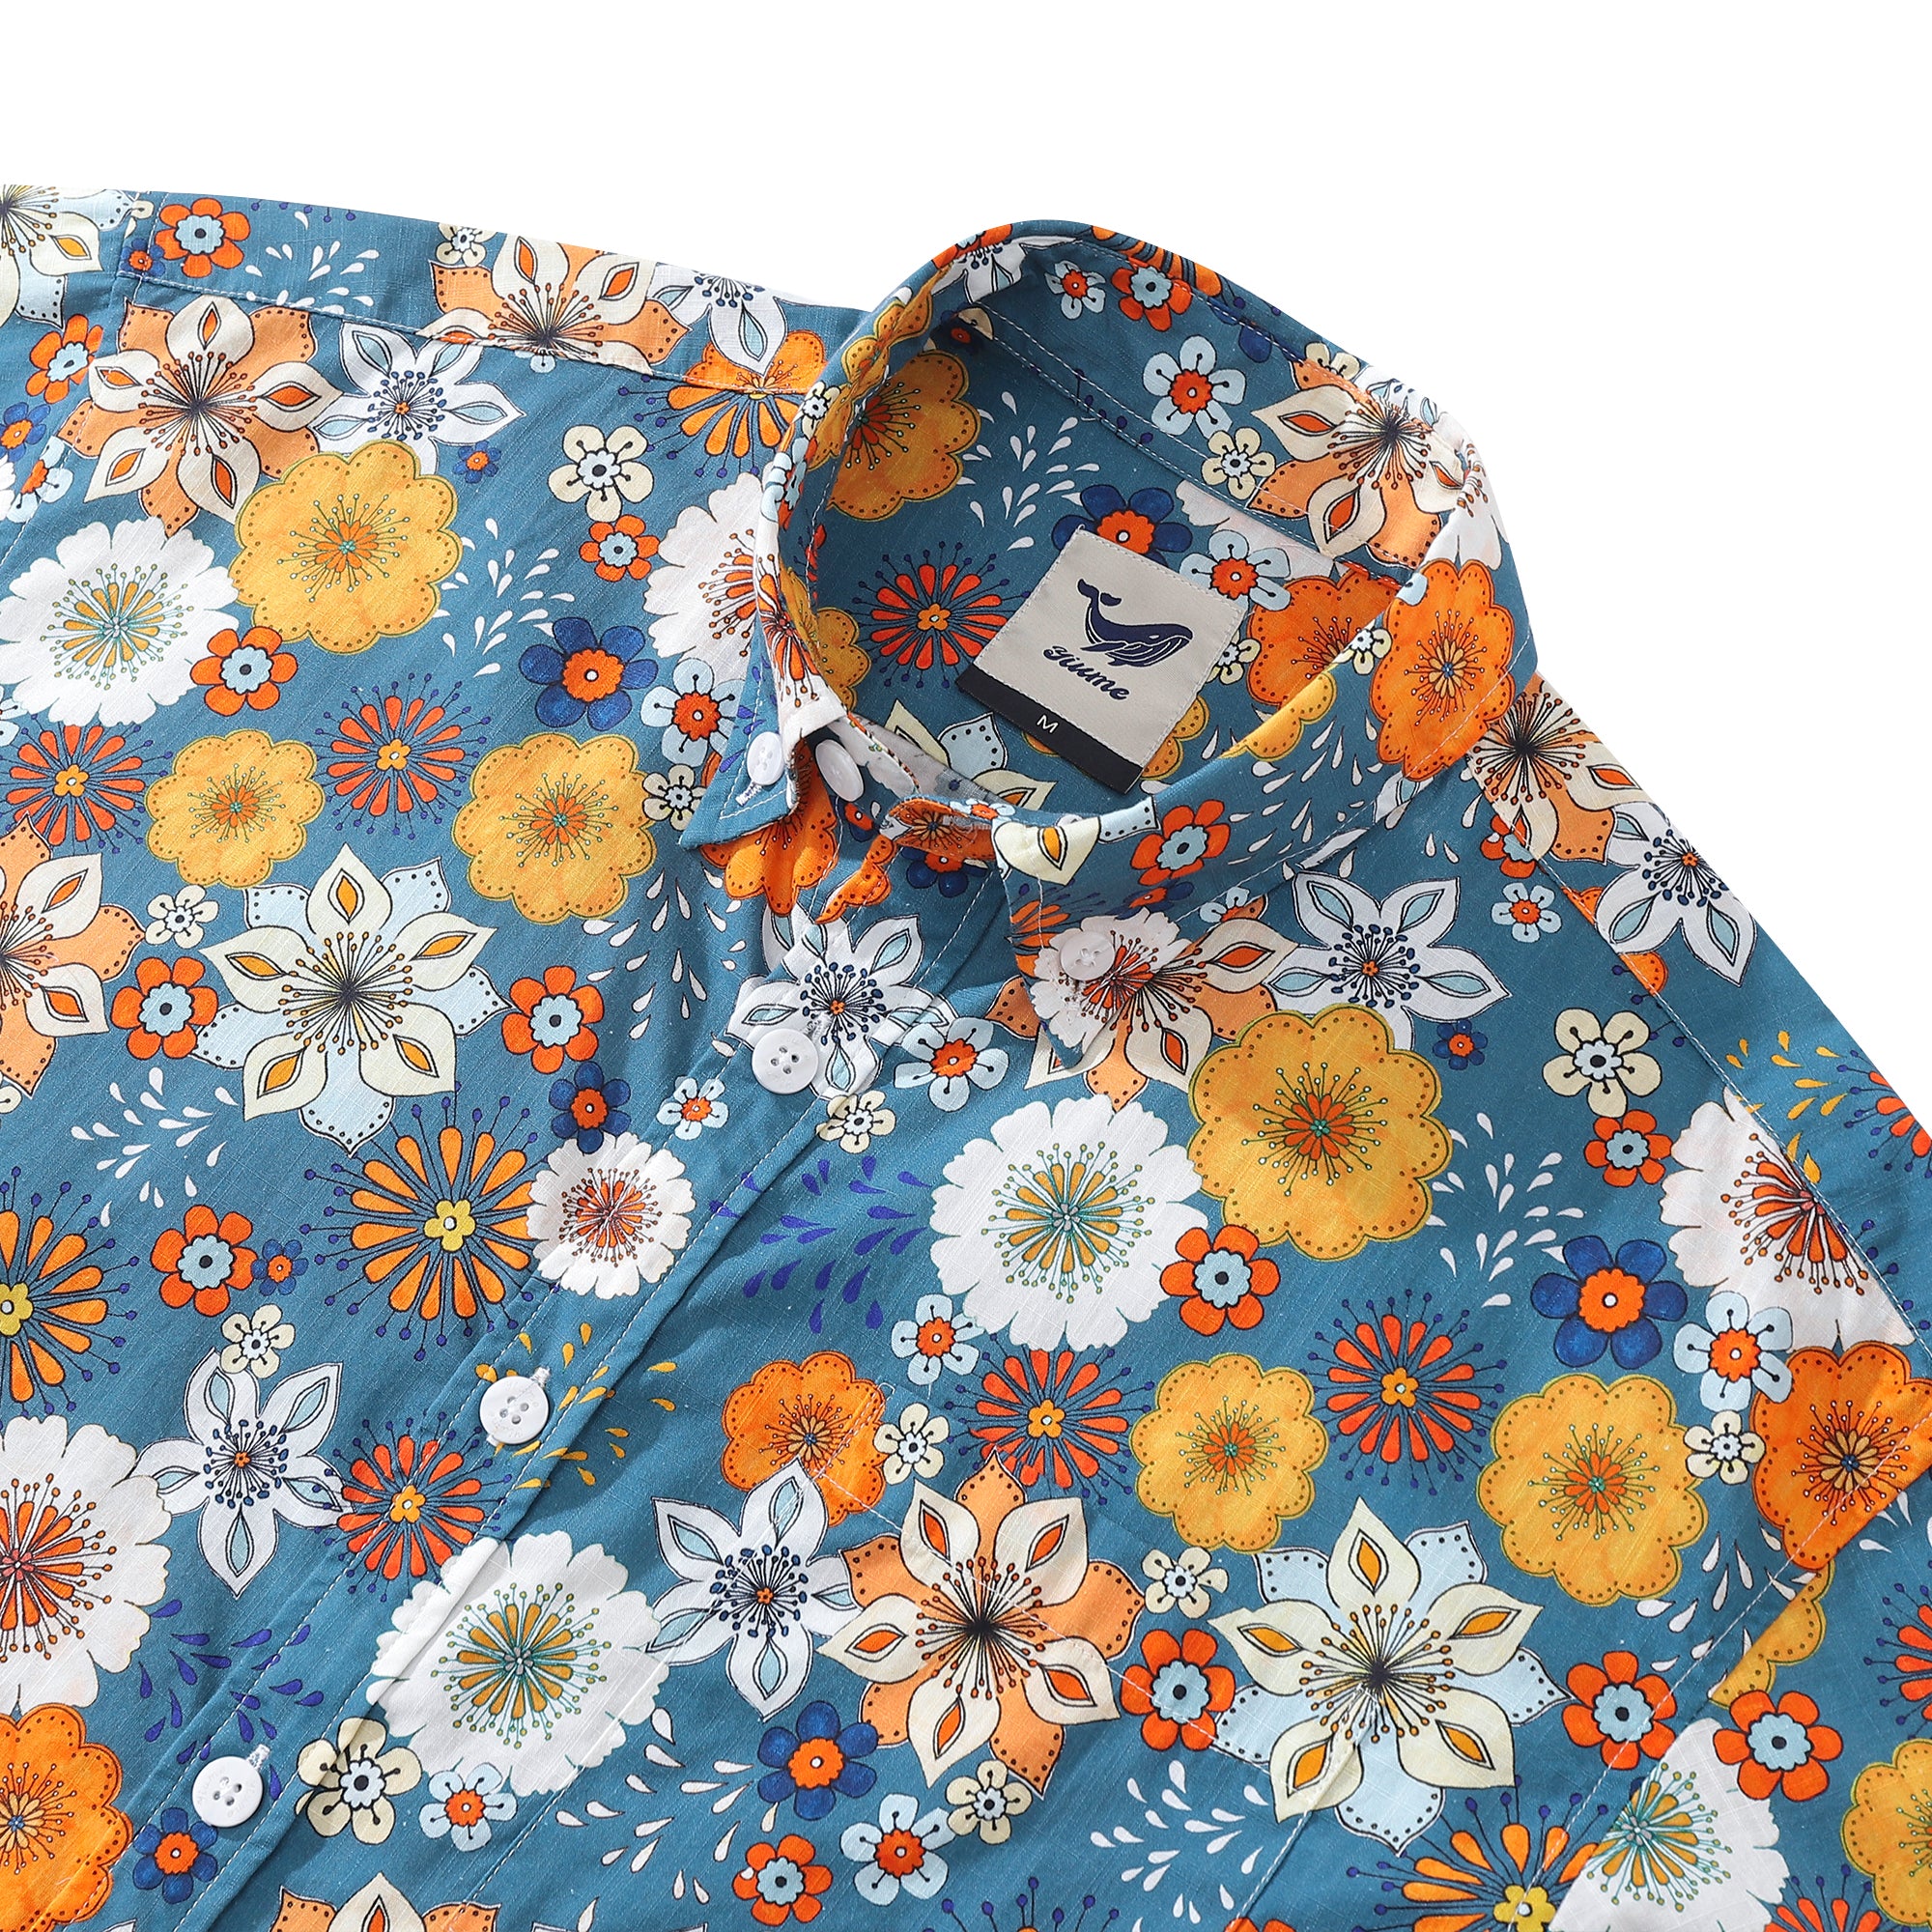 Men's Hawaiian Shirt 60's Floral Print Cotton Button-down Short Sleeve Aloha Shirt